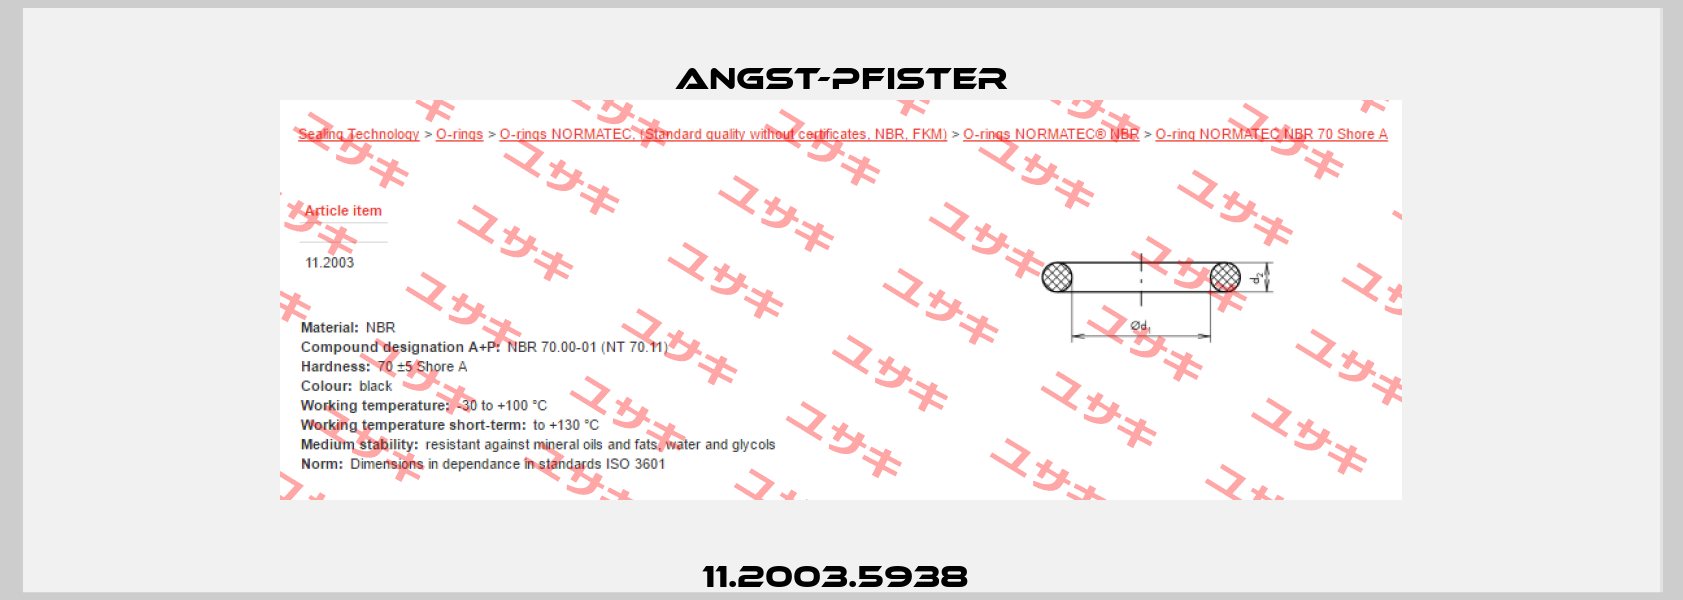 11.2003.5938  Angst-Pfister